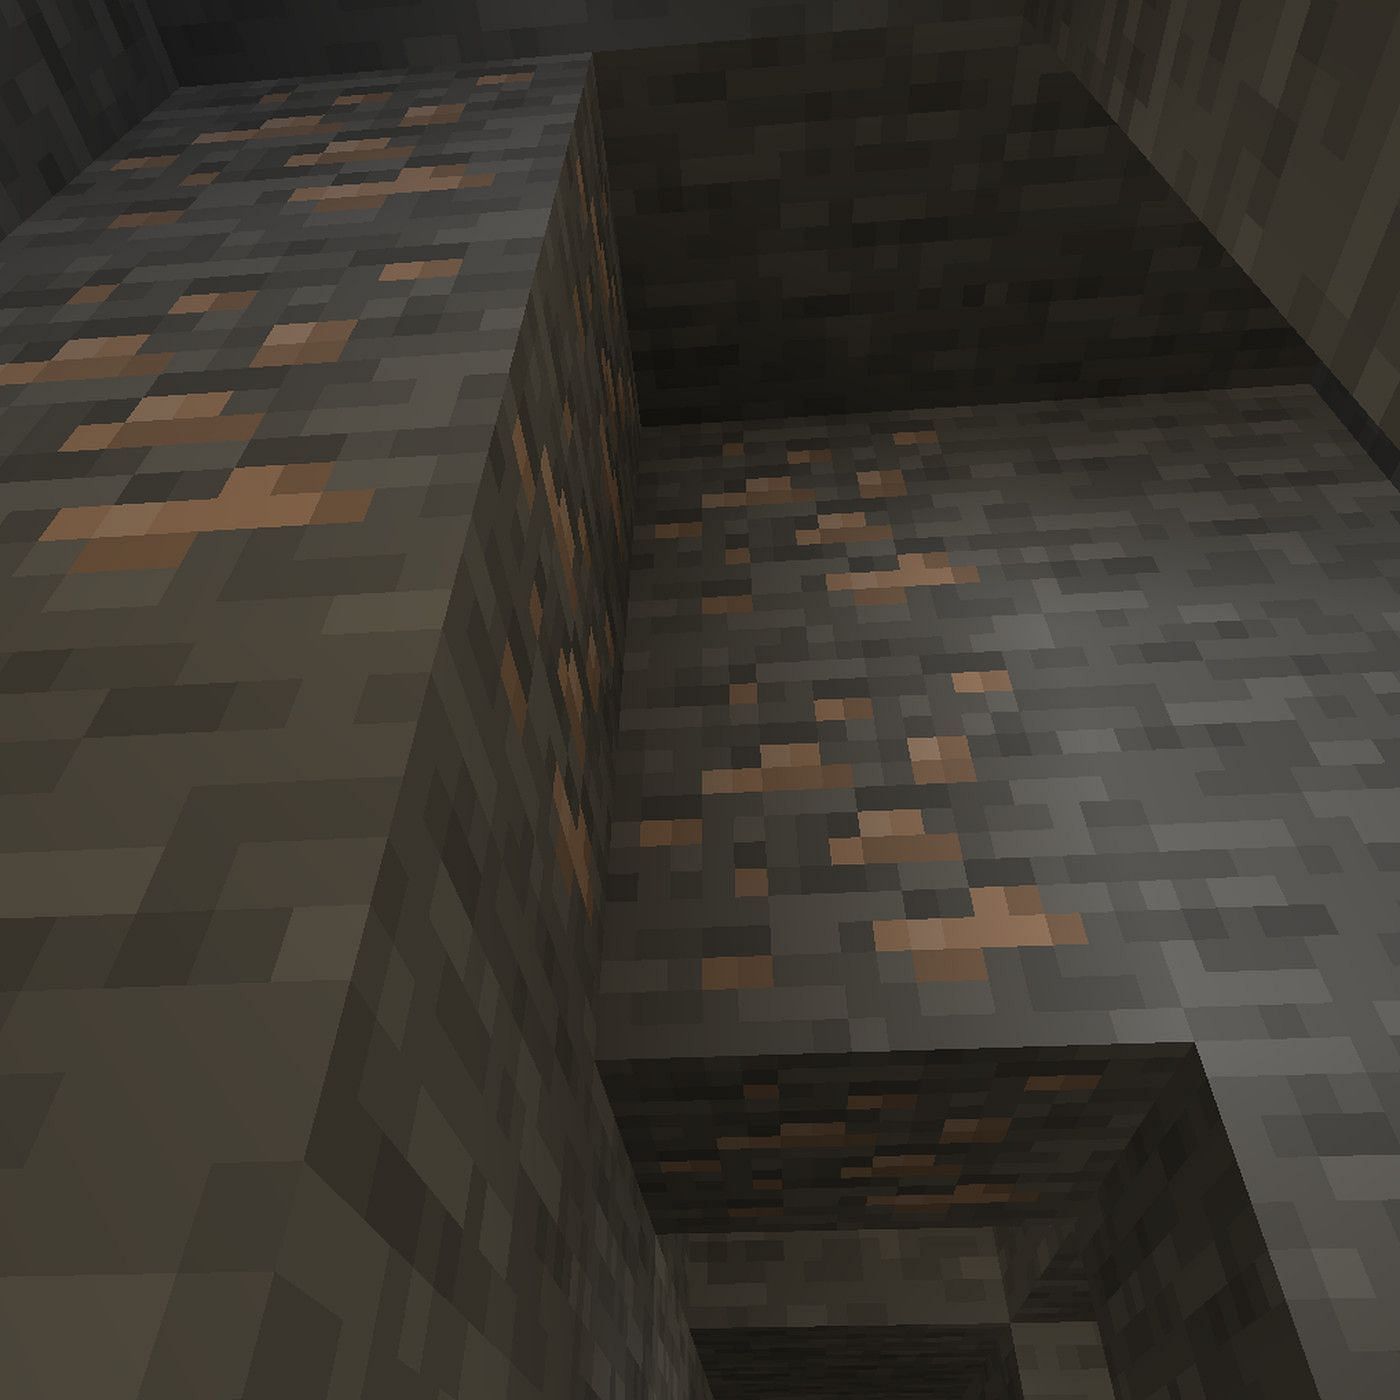 Iron ore in a cave (Image via Mojang)